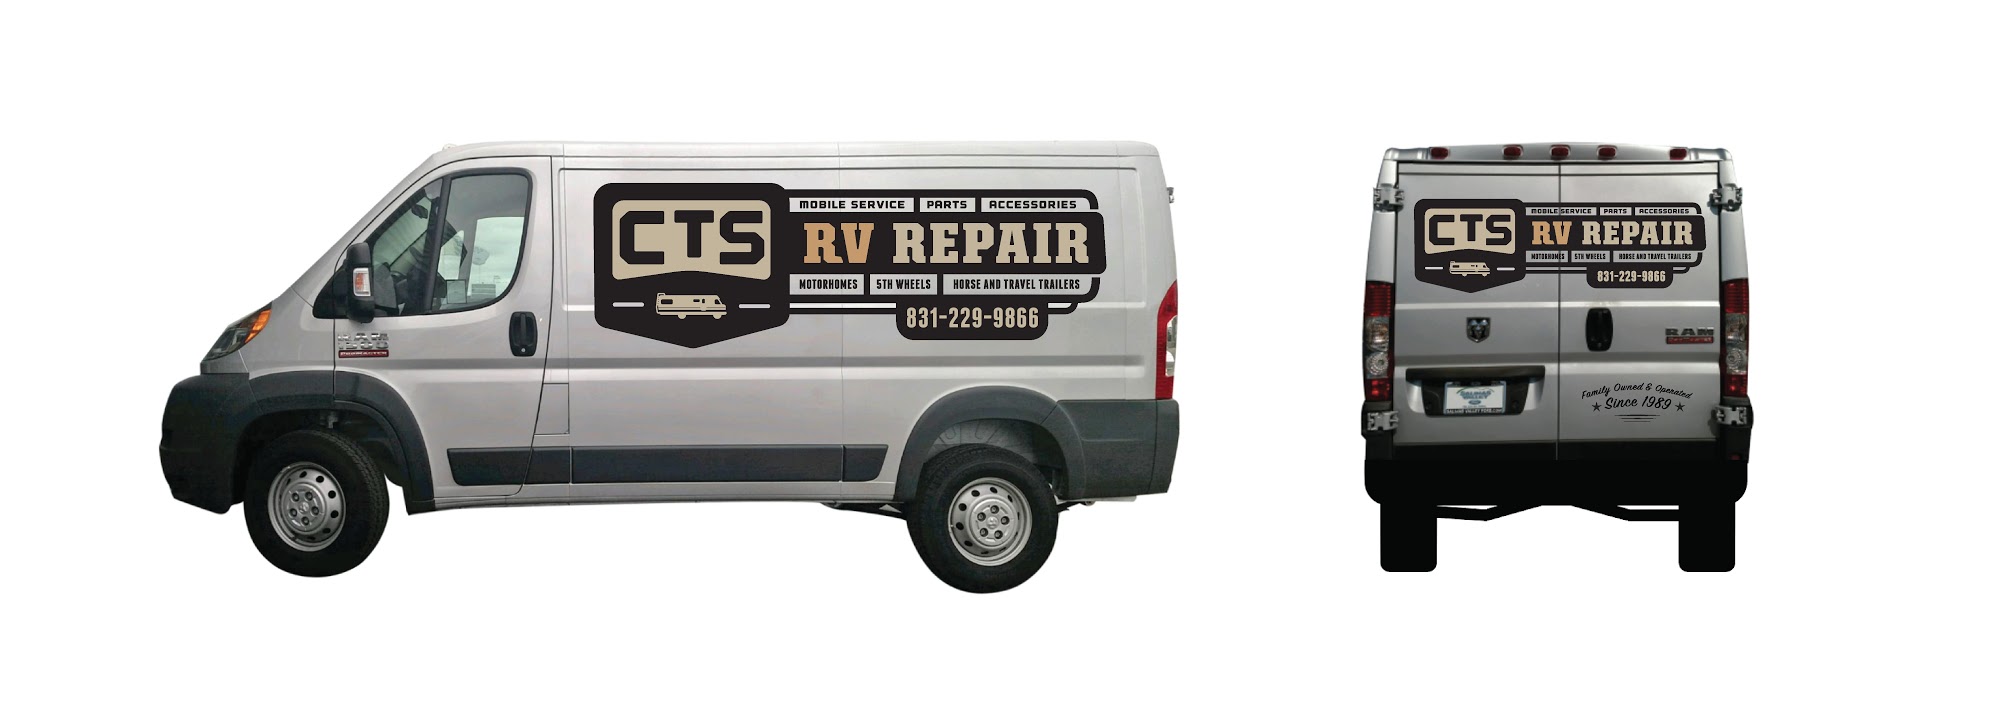 CTS RV Repair